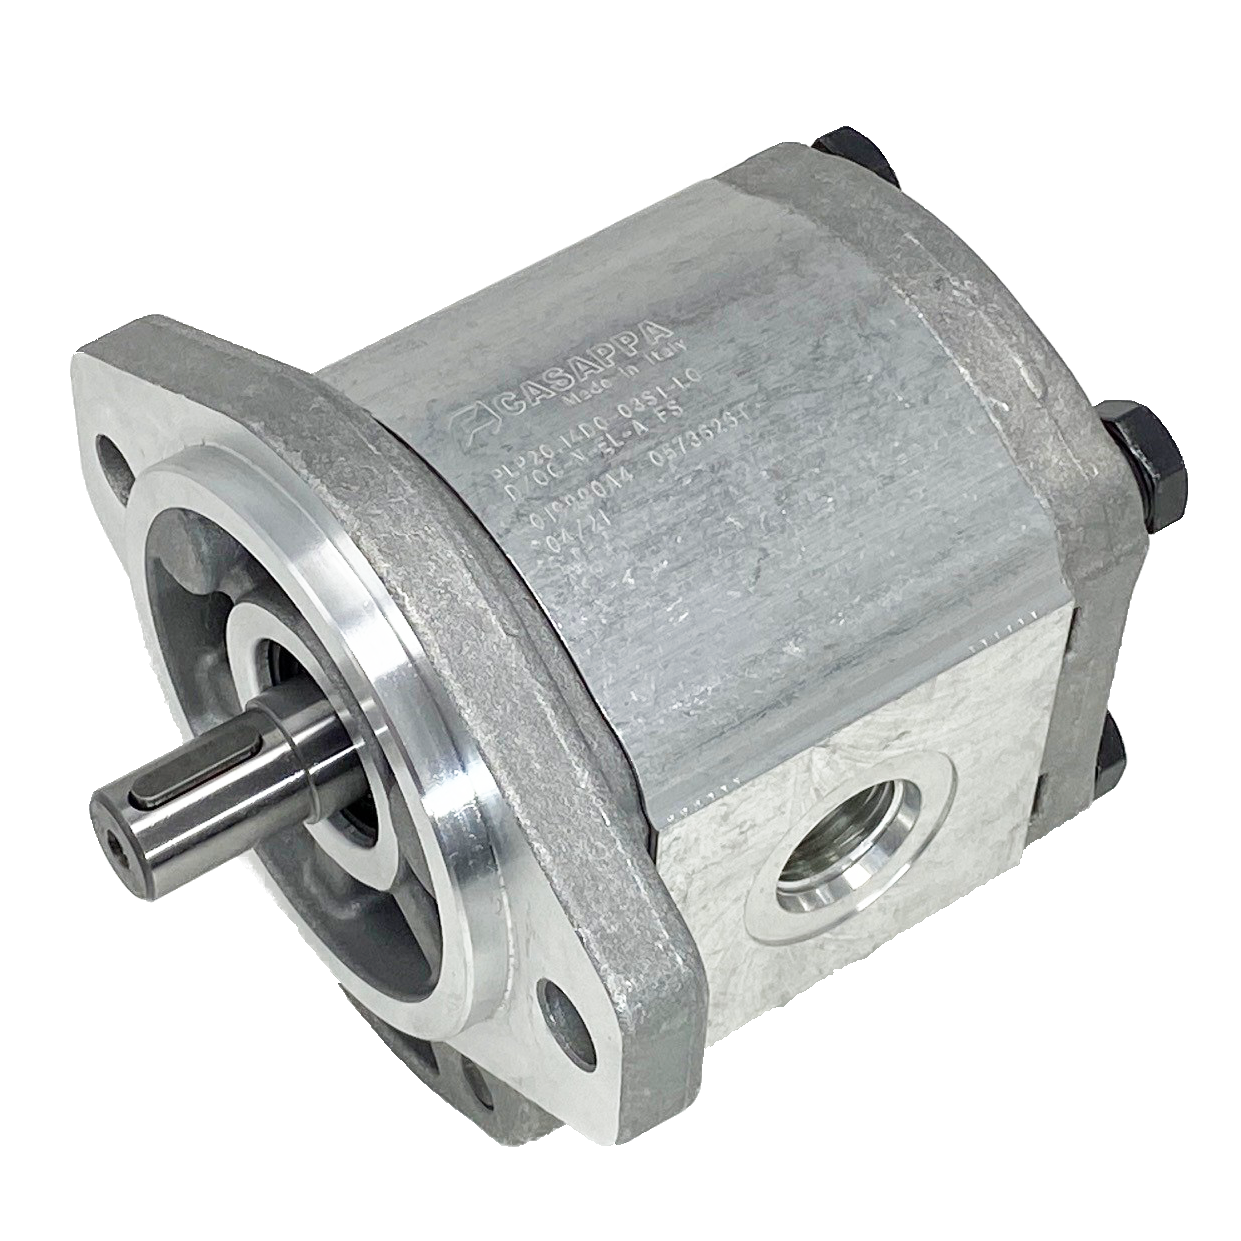 PLM20.16R0-31S1-LOC/OD-N-EL : Casappa Polaris Gear Motor, 16.85cc, 3625psi Rated, 3000RPM, Reversible Rear External Drain, 5/8" Bore x 5/32" Key Shaft, SAE A 2-Bolt Flange, 0.625 (5/8") #10 SAE Inlet, 0.75 (3/4") #12 SAE Outlet, Aluminum Body & Flange